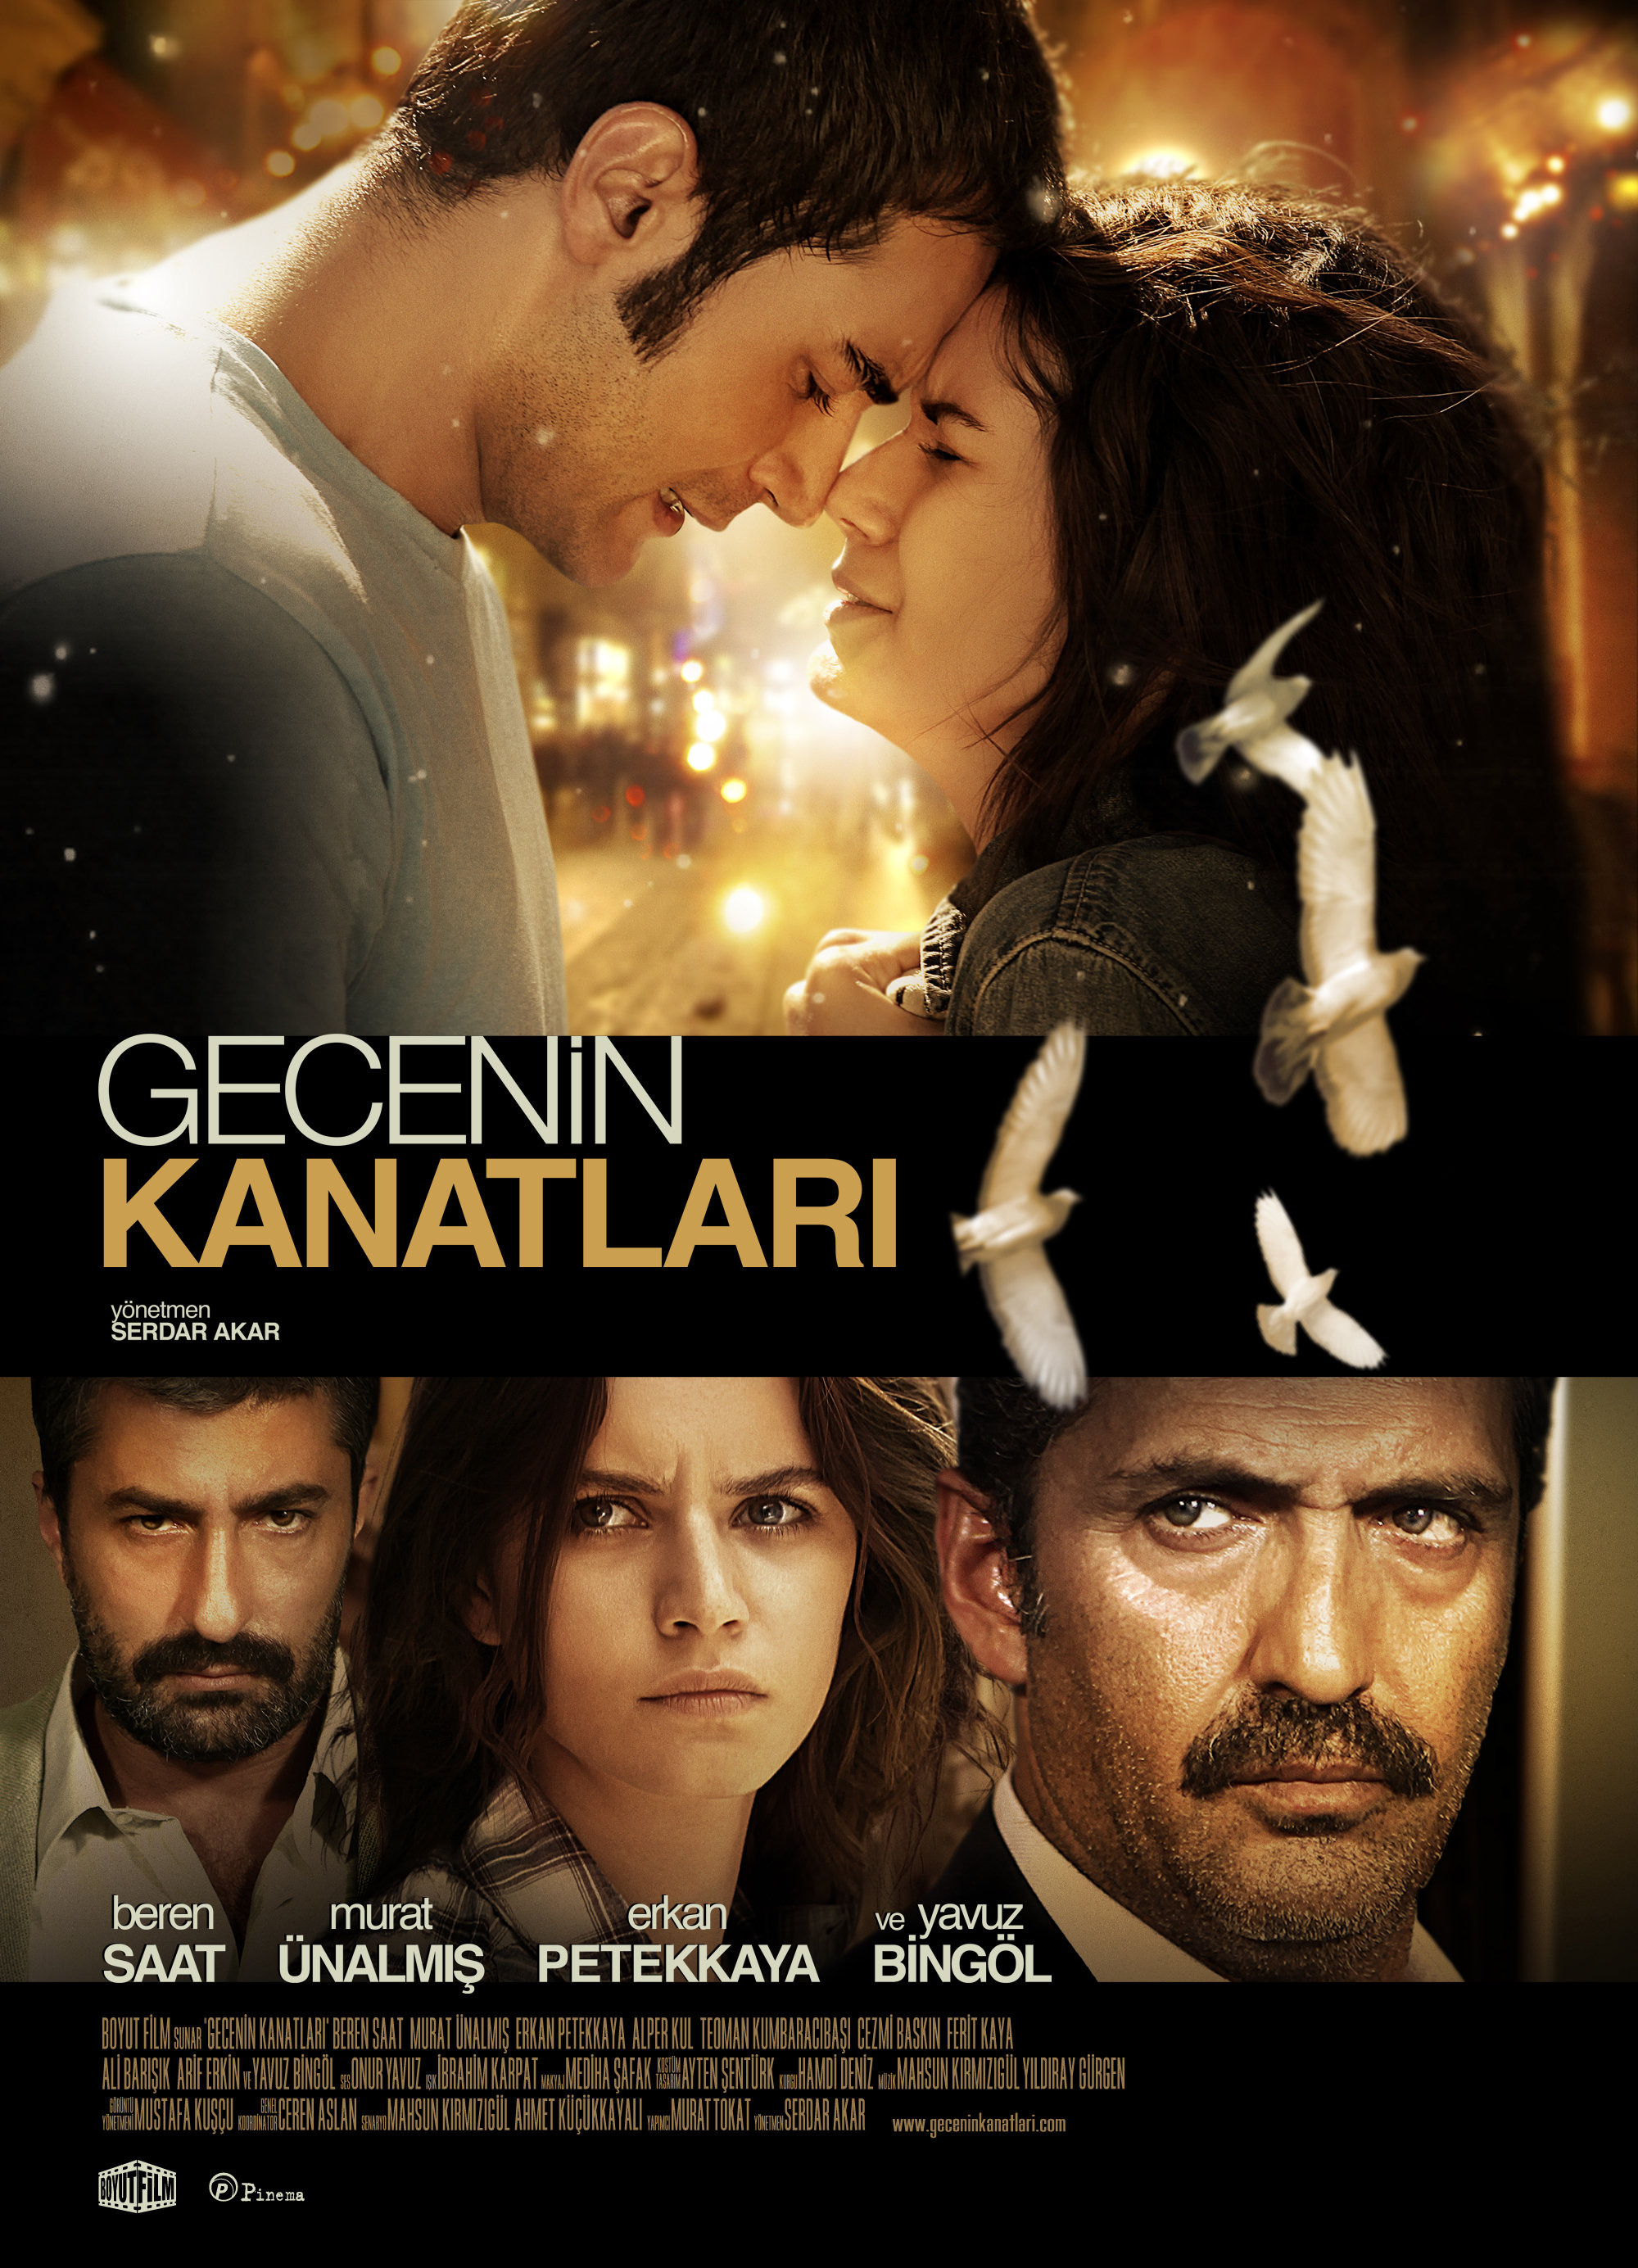 Mega Sized Movie Poster Image for Gecenin Kanatlari (#1 of 2)